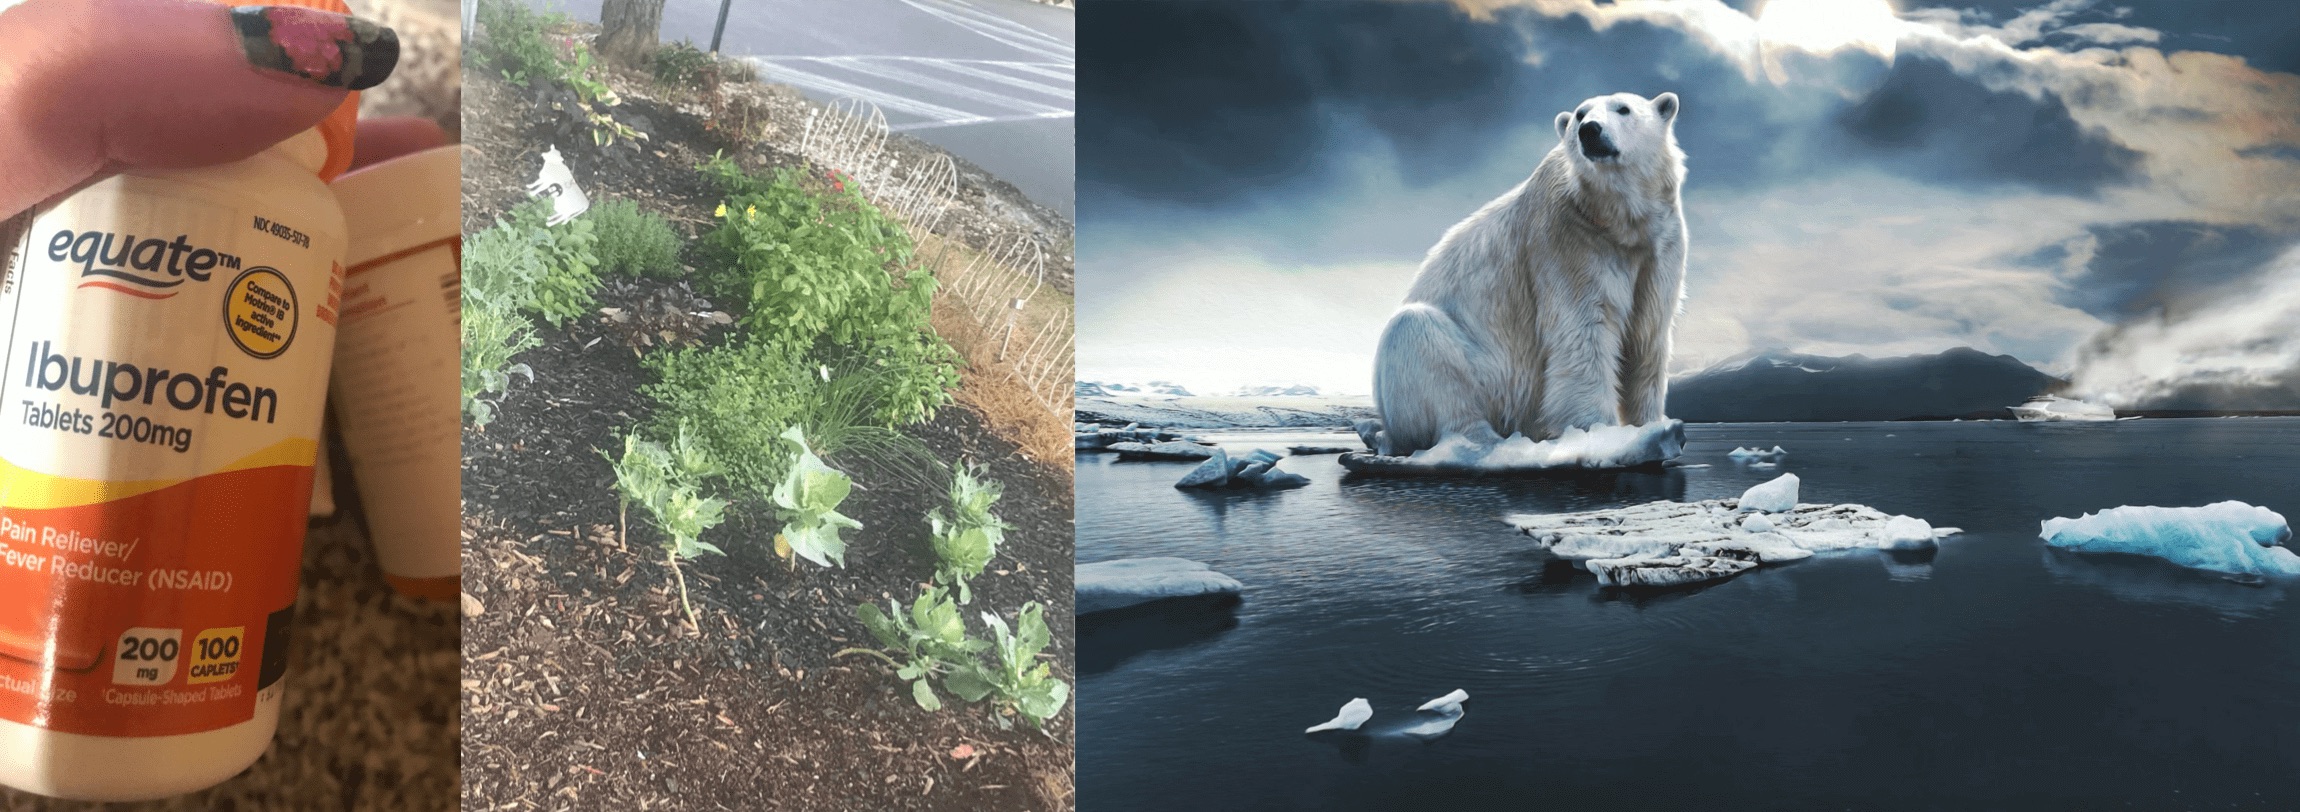 ibuprofen bottle, garden, polar bear on melting ice